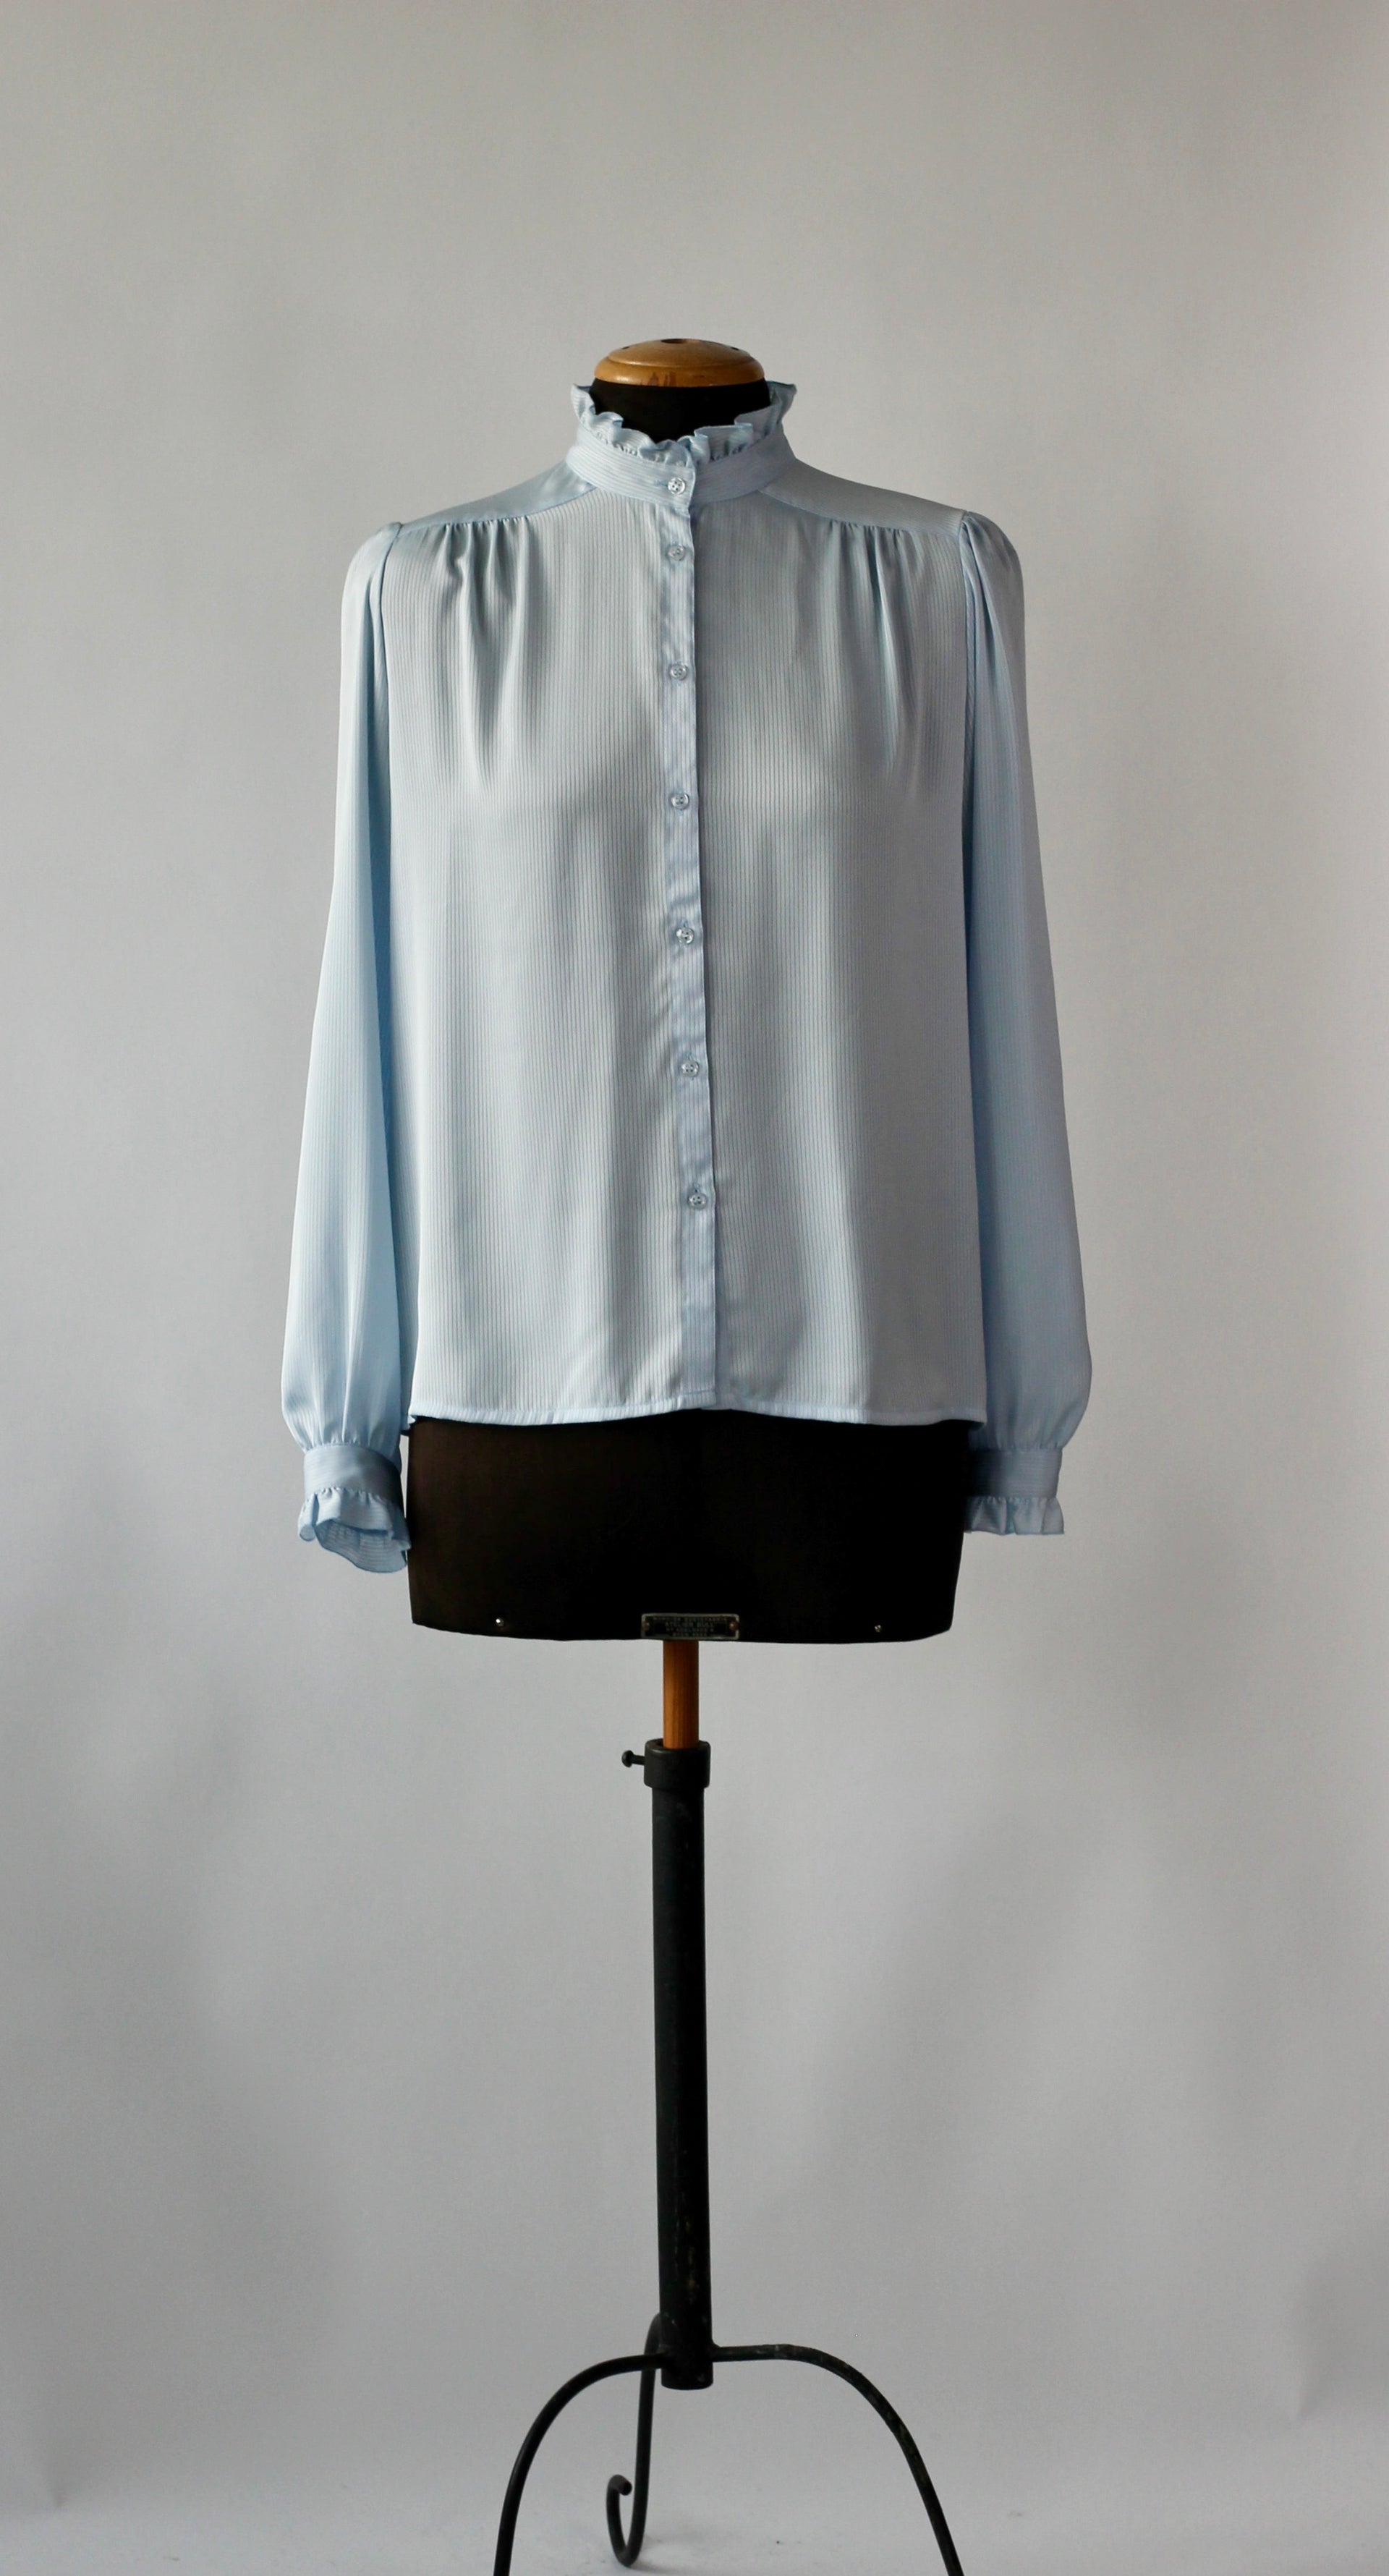 1980s Vintage Light Blue Shirt with Tie Band//Size M/L